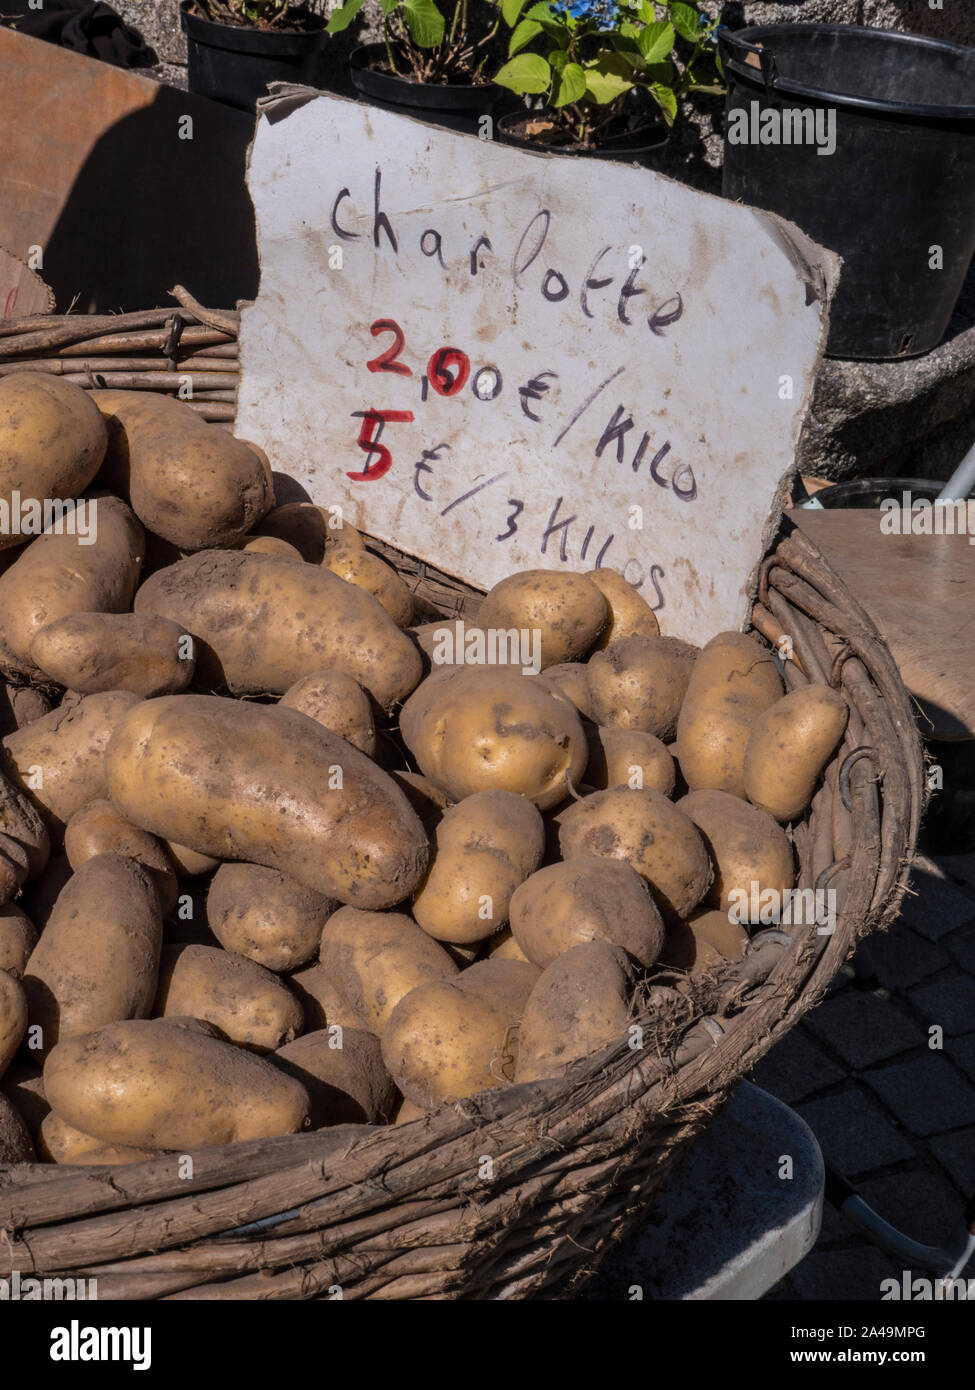 CHARLOTTE KARTOFFELN FRANZÖSISCH 2 € kilo Koffer Warenkorb der Französischen Kartoffeln in frischem Farmers Market Nevéz Bretagne Frankreich Stockfoto